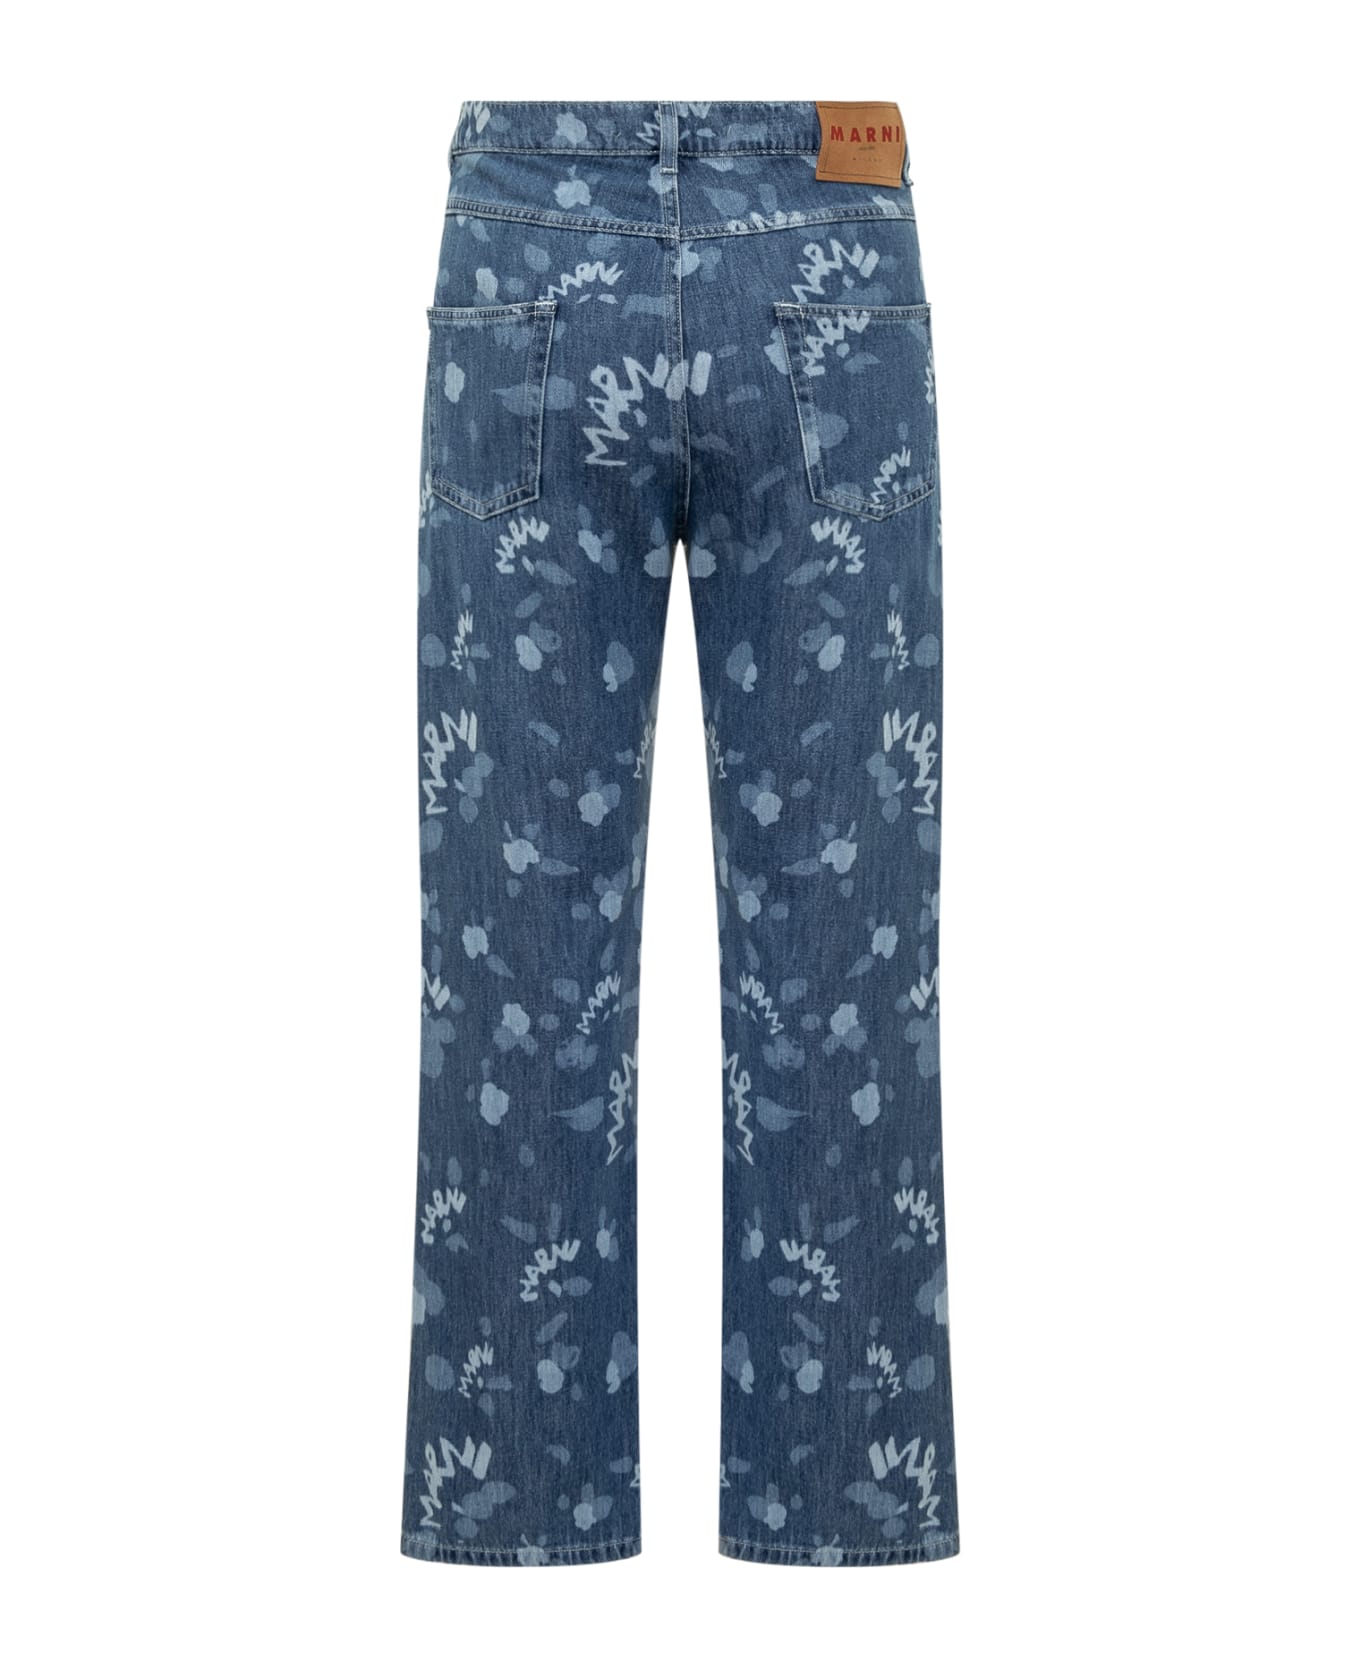 Marni Jeans With Marni Dripping Print - IRIS BLUE